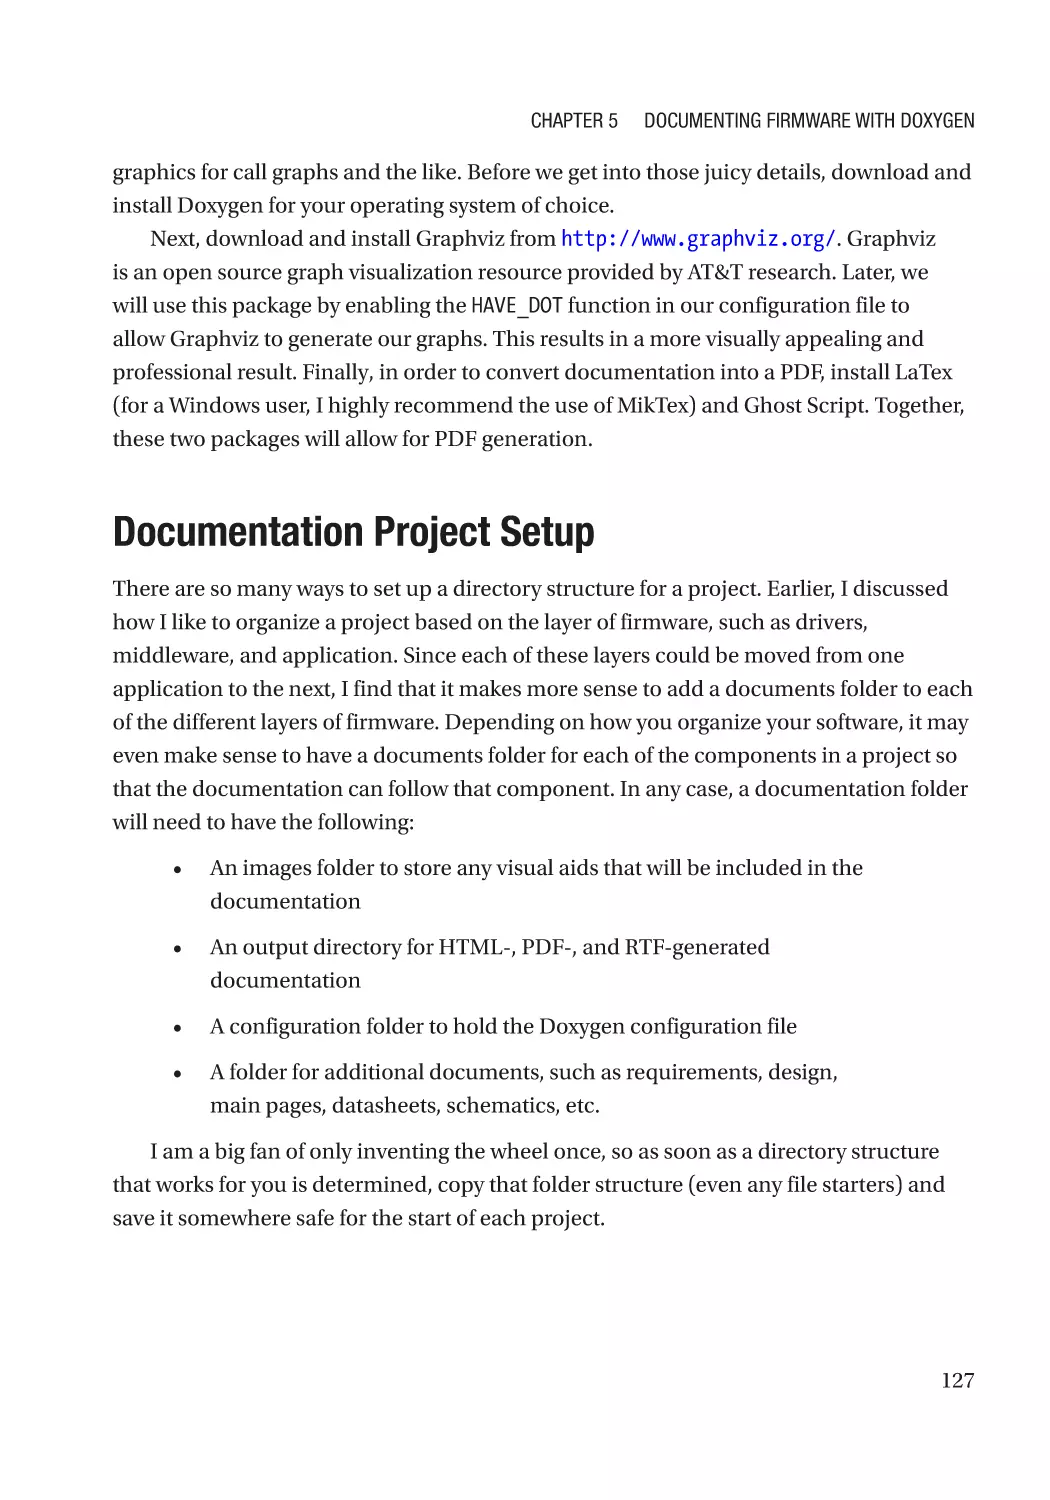 Documentation Project Setup